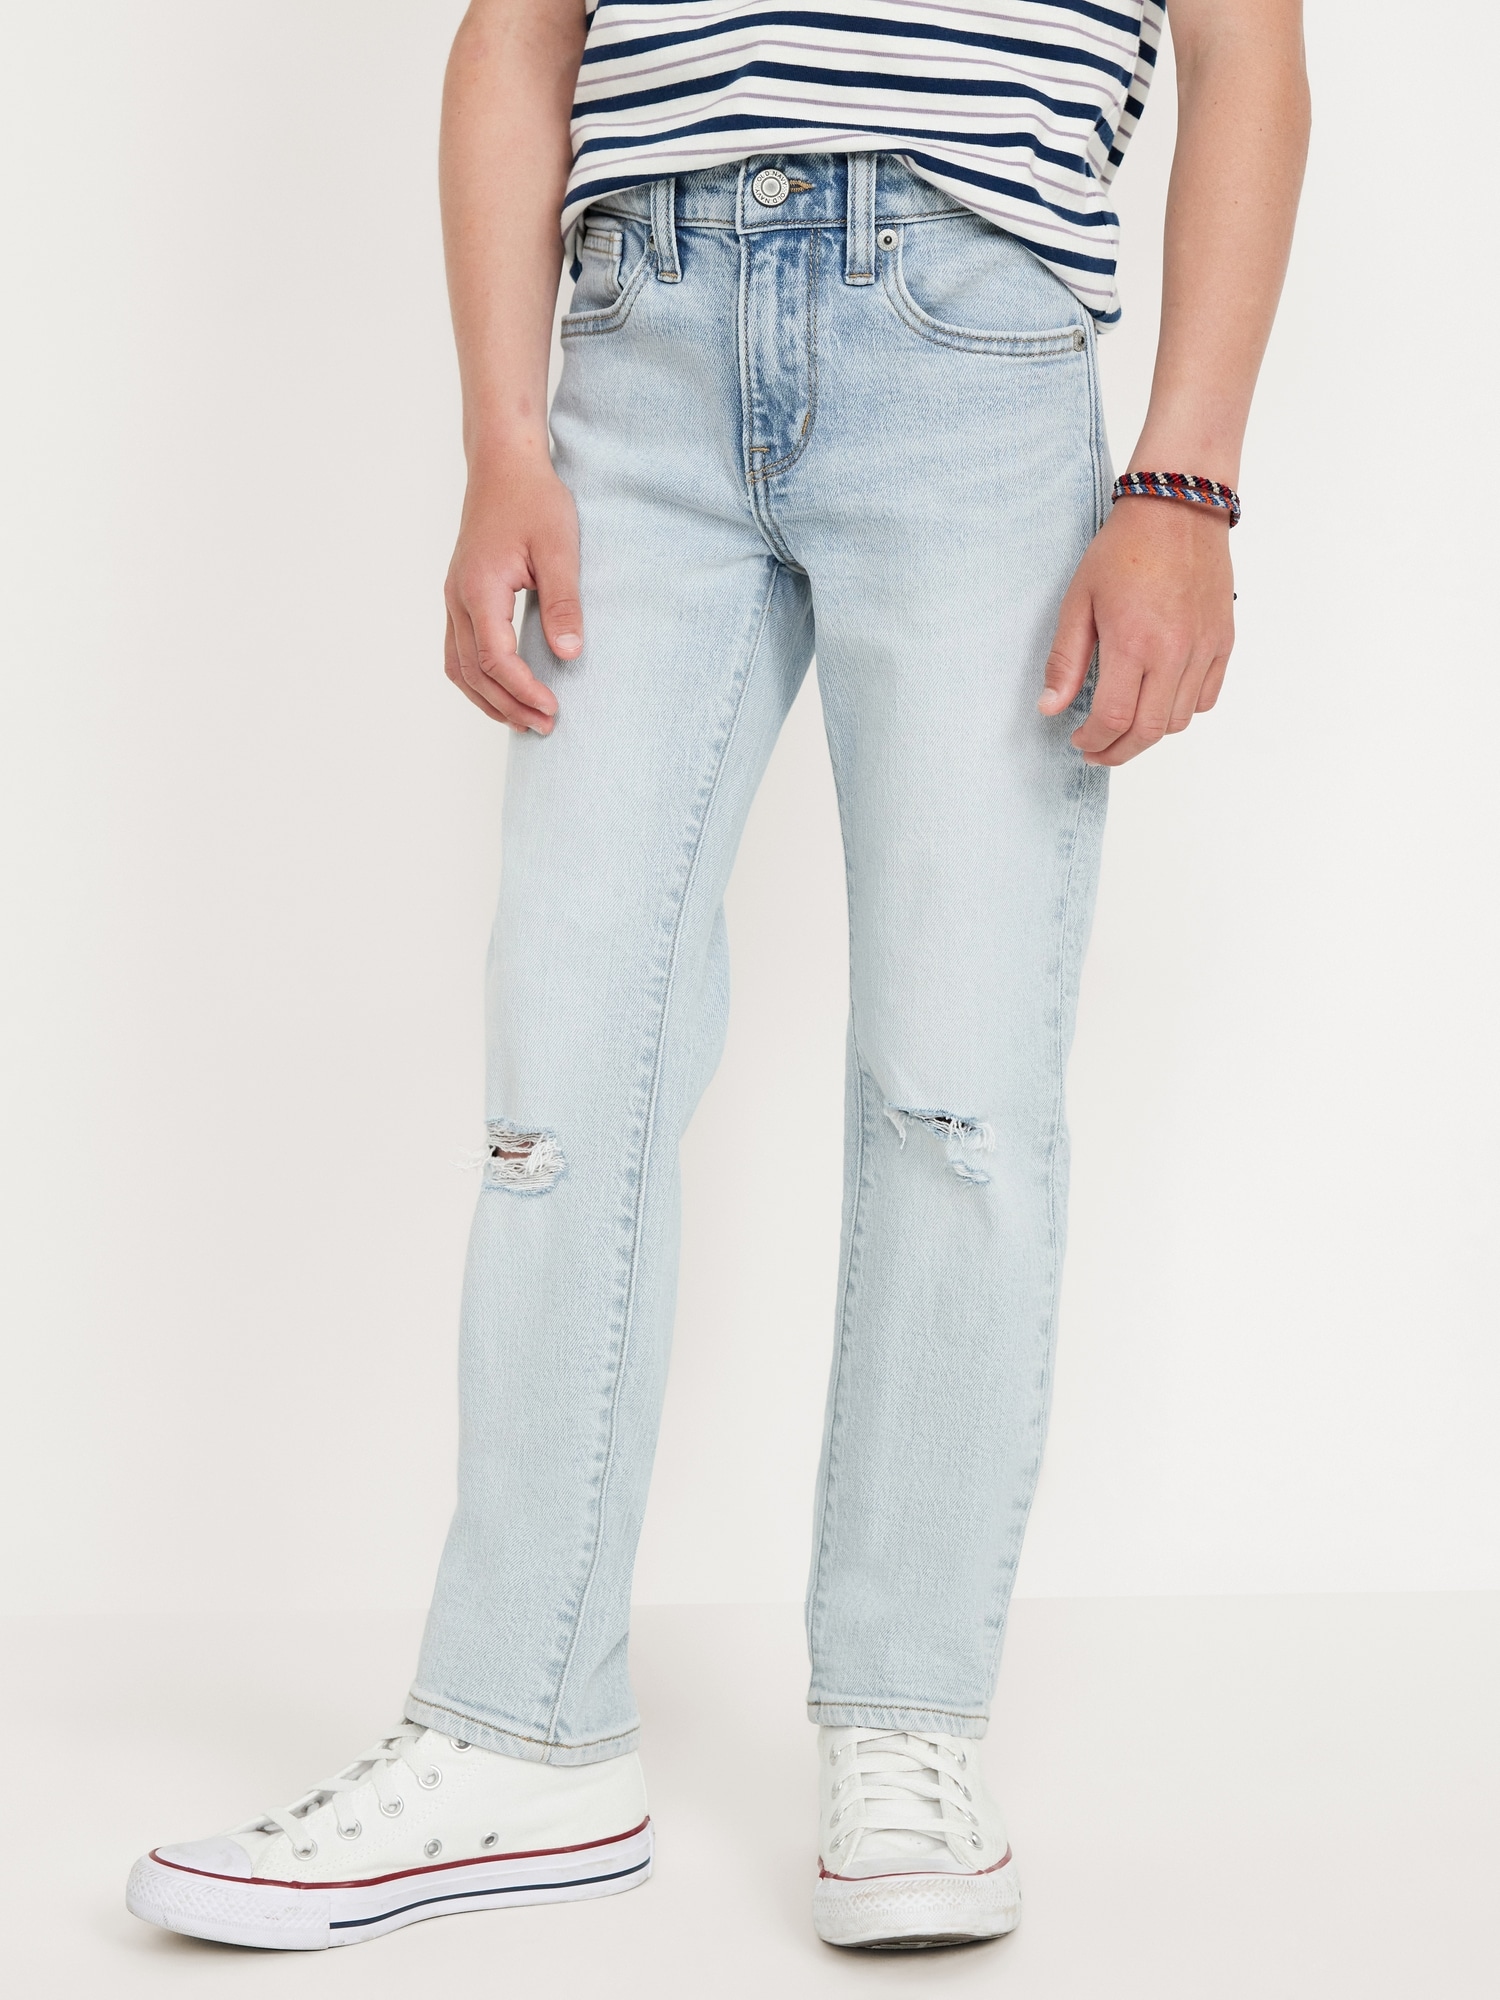 Slim 360° Stretch Jeans for Boys